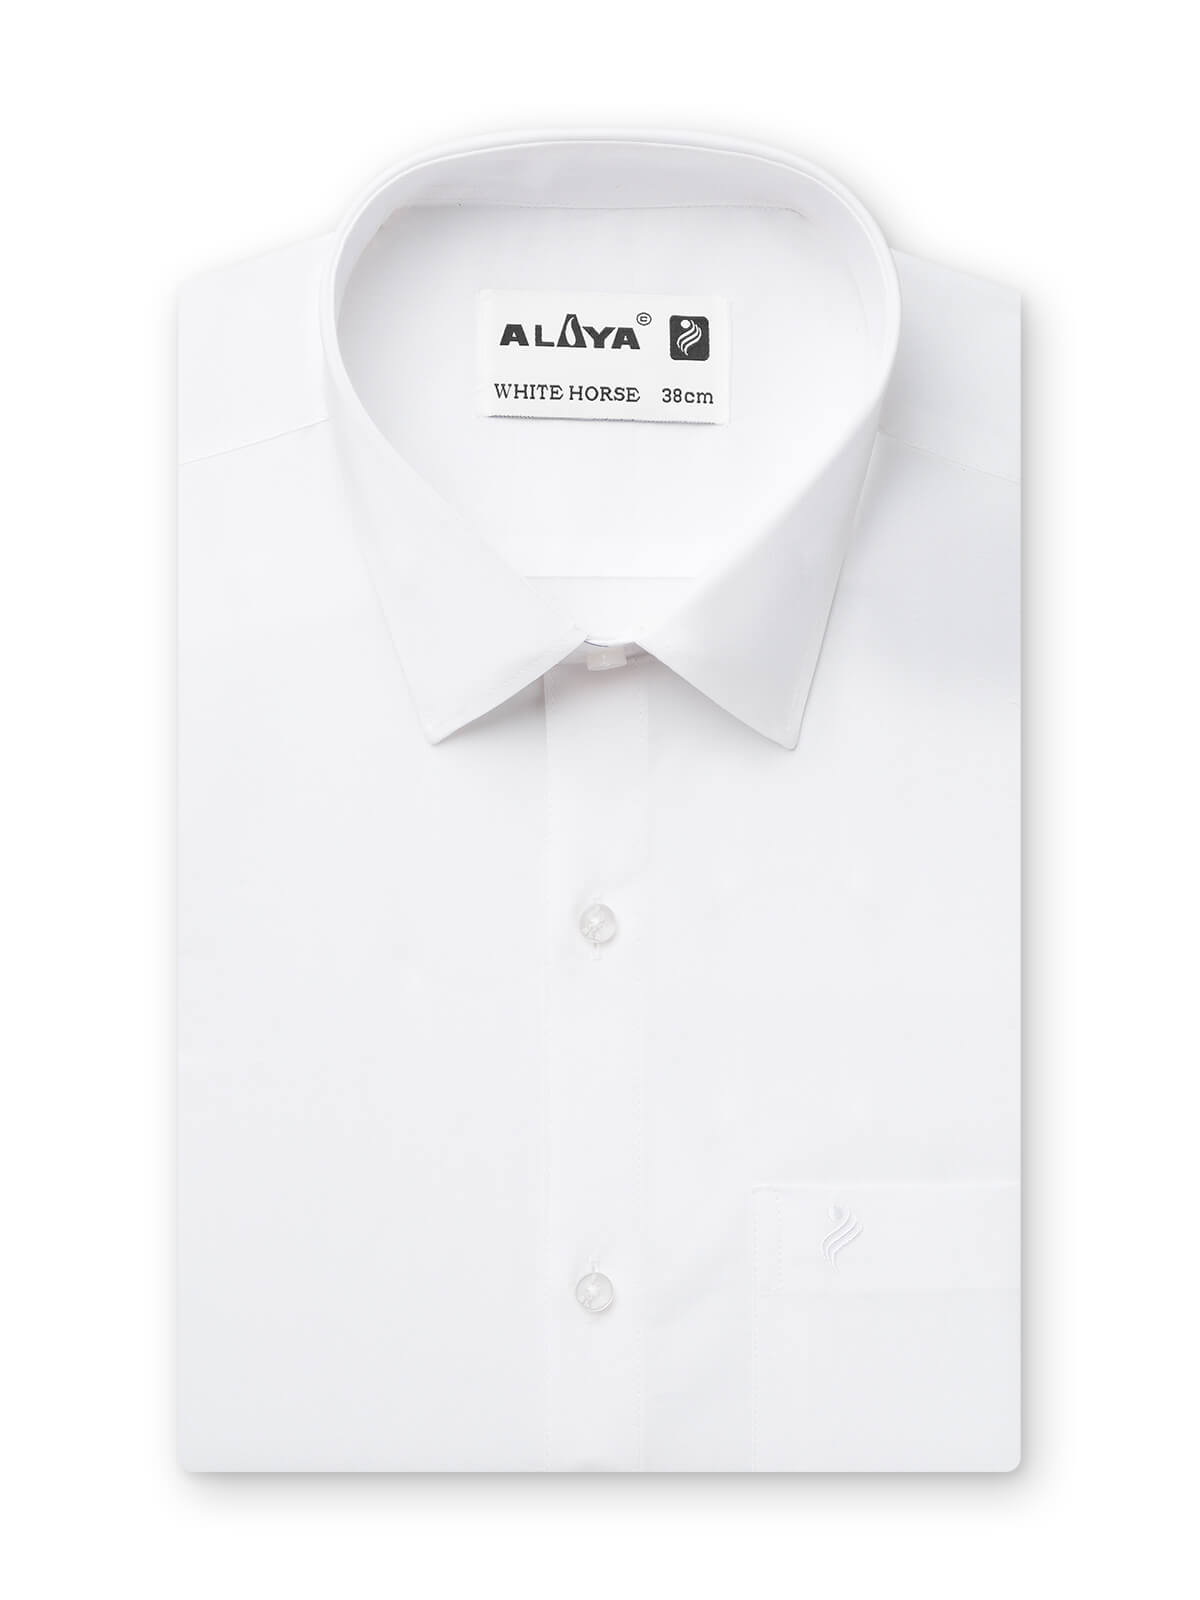 Alaya cotton white shirt new arrivals 